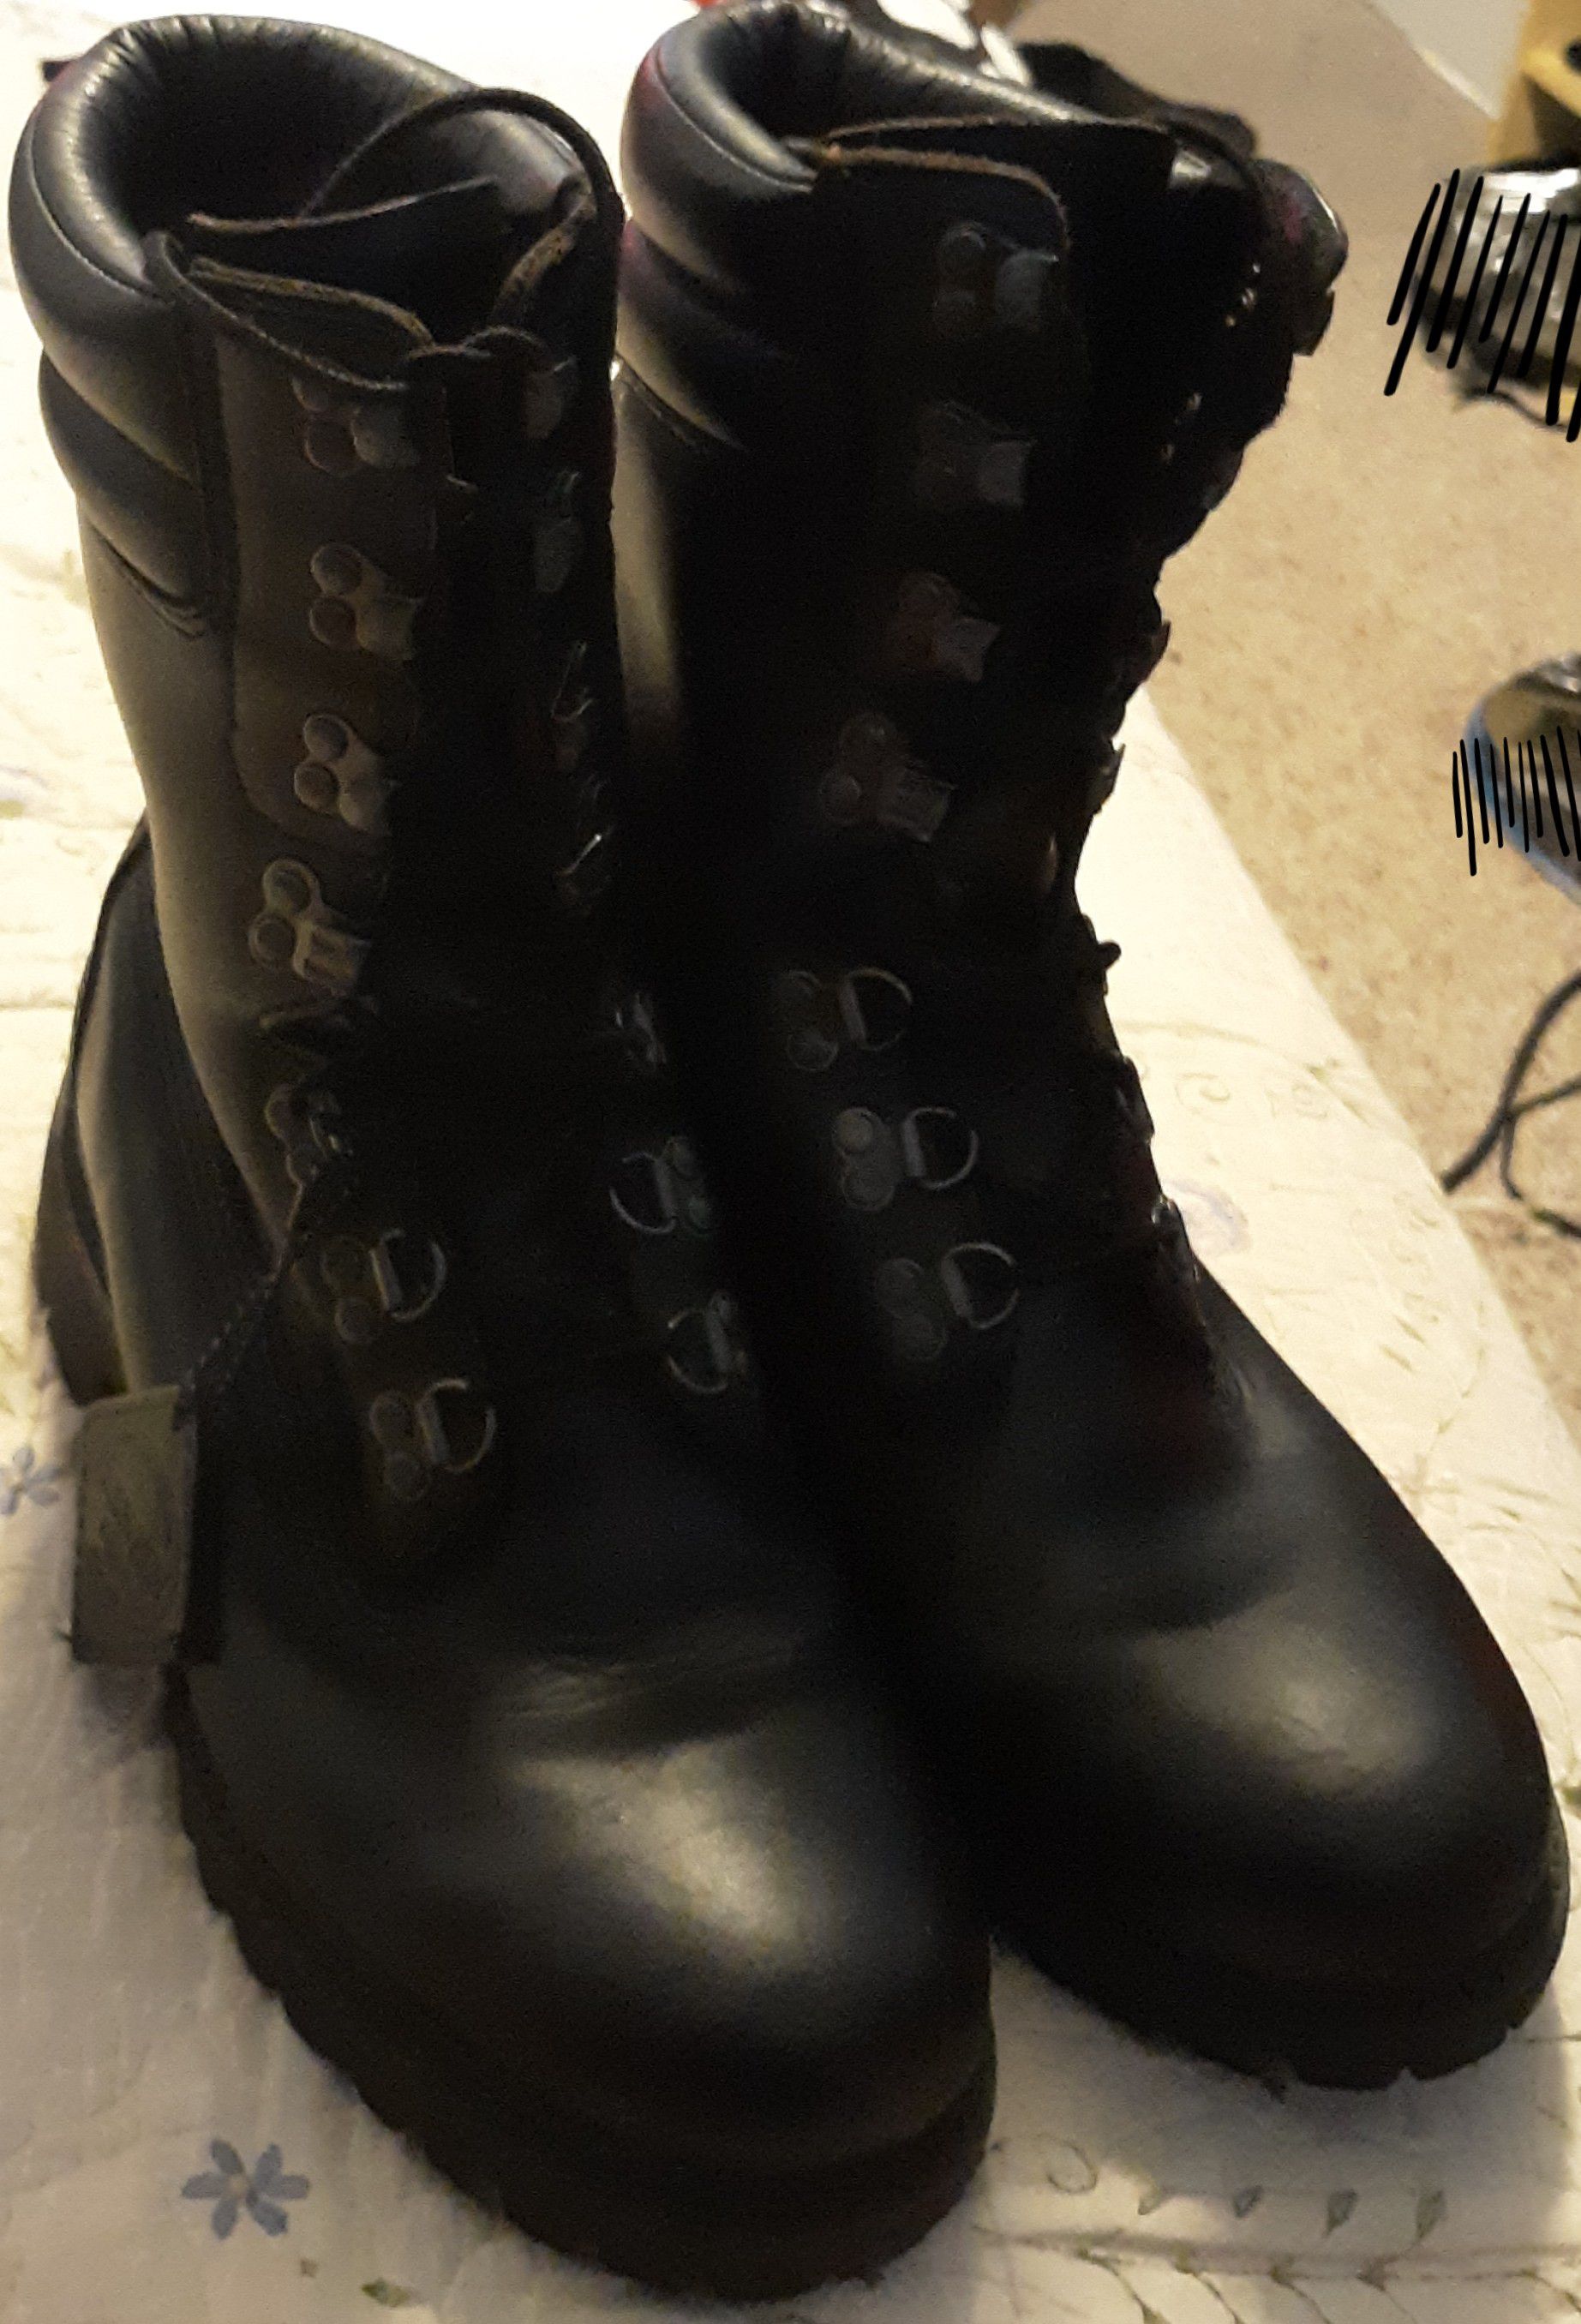 Timberland Vibram Men's Black Waterproof Boots size: 9.5 M. (2940)